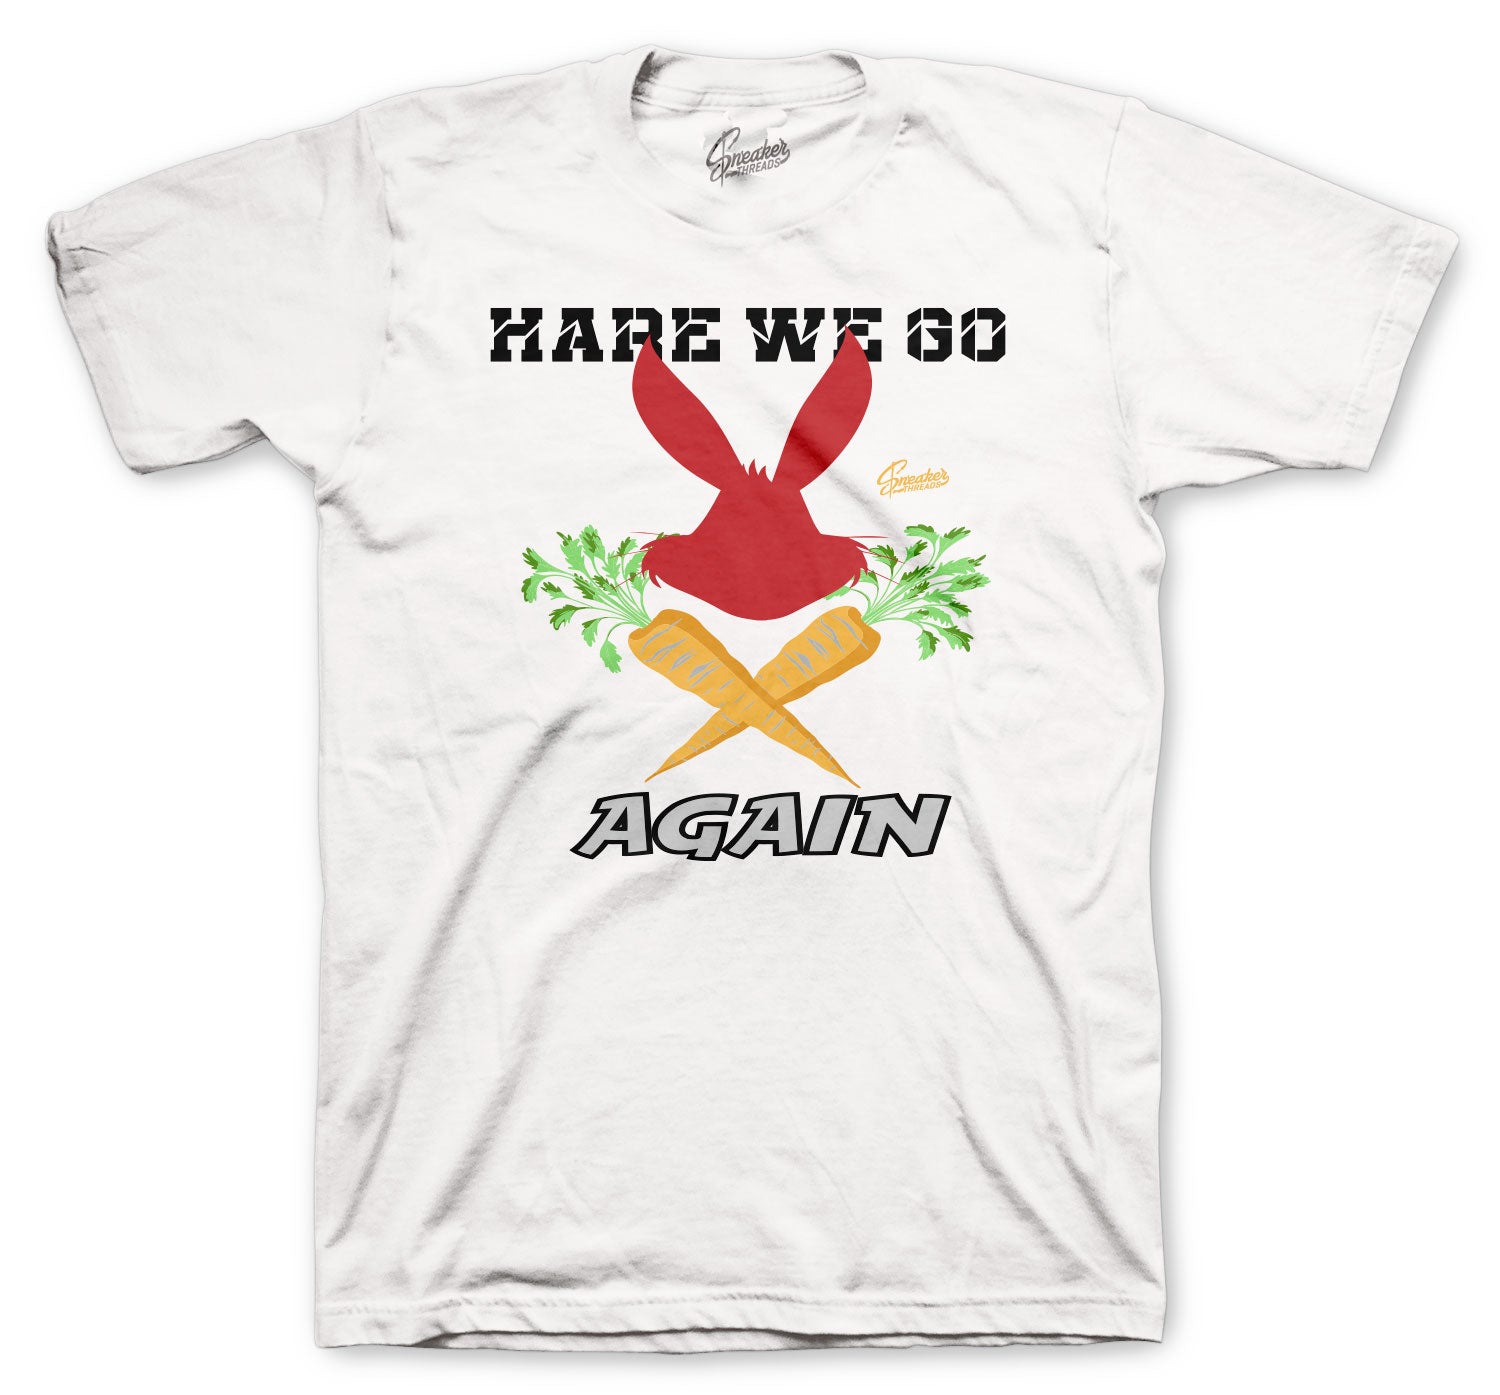 shirts for jordan 6 hare